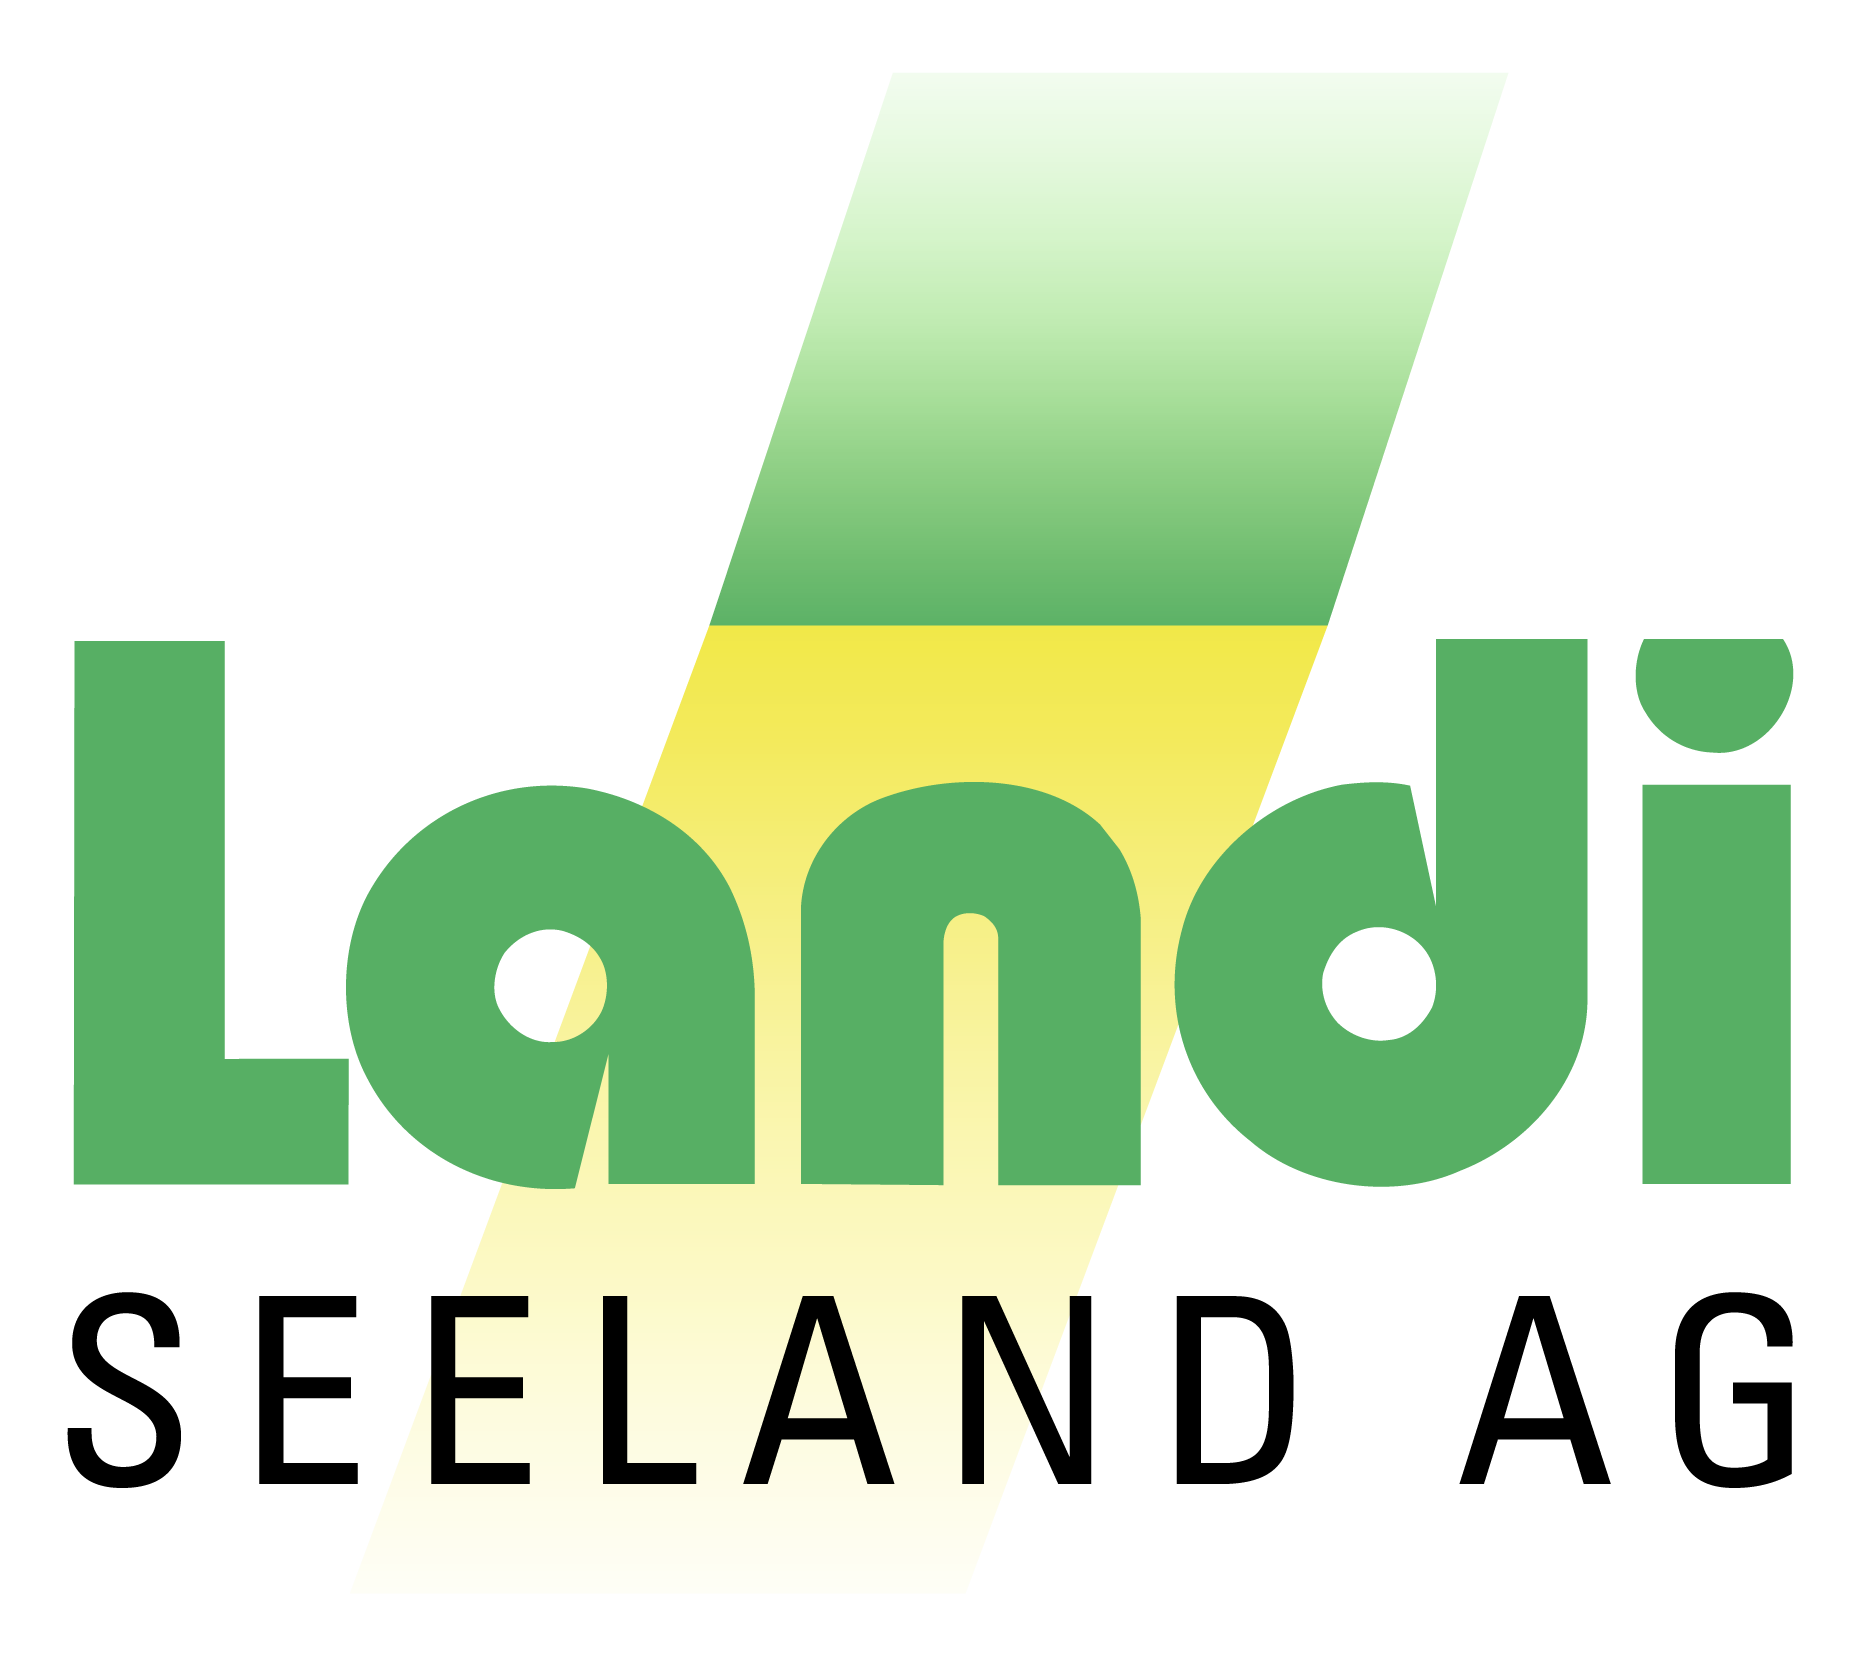 LANDI Seeland AG